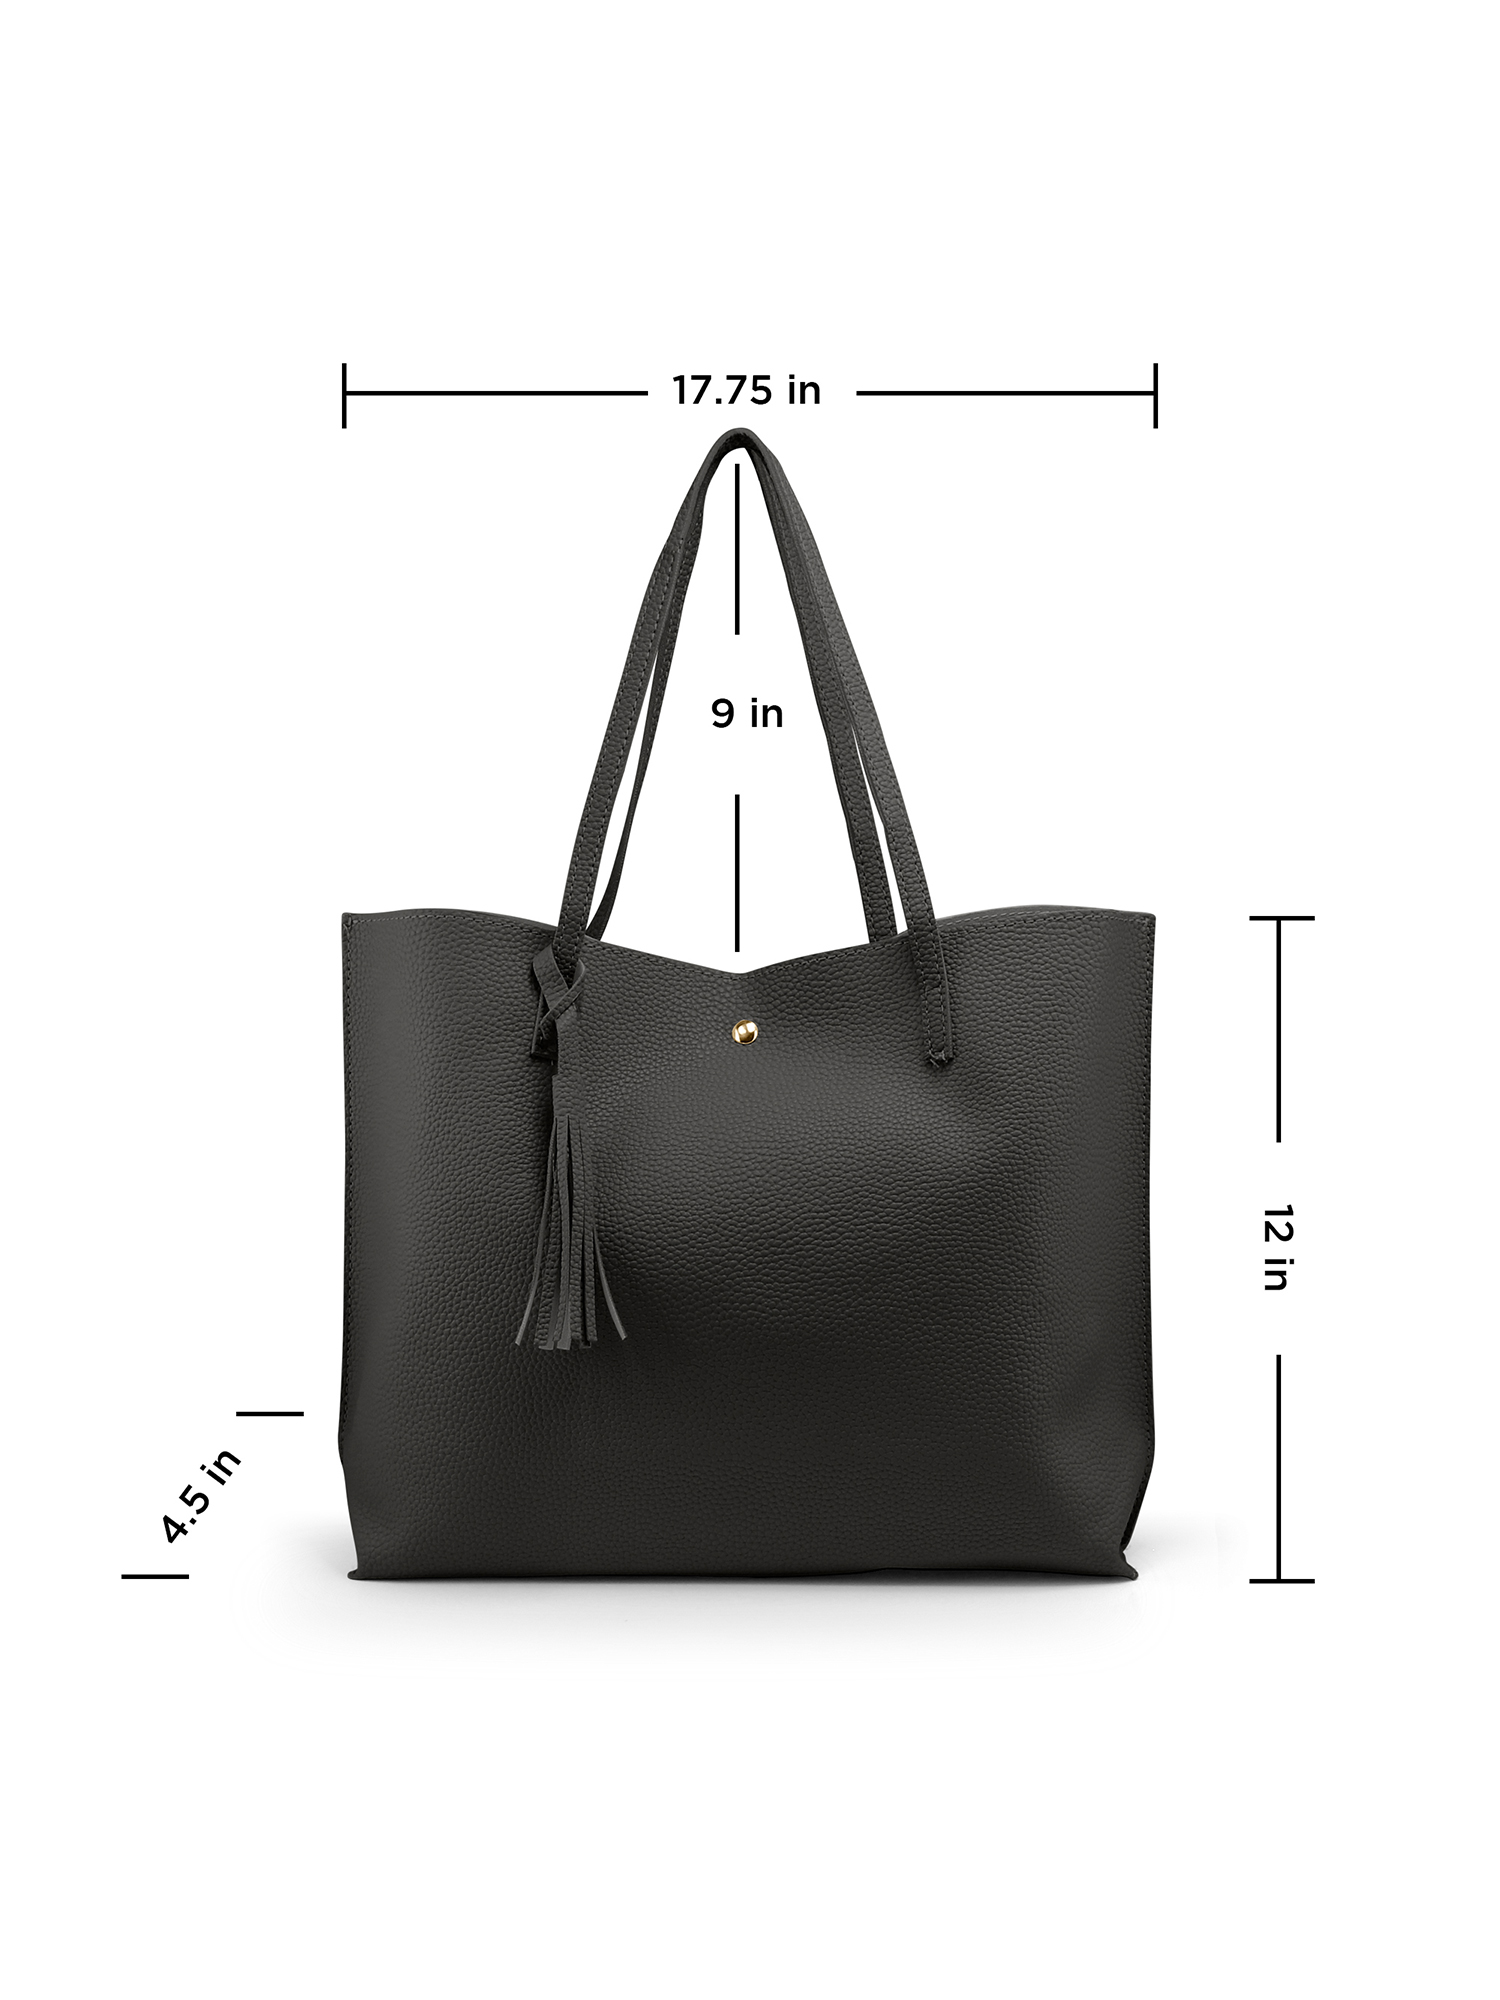 Women PU Leather Tote Bag Tassels Leather Shoulder Handbags Fashion Ladies Purses Satchel Messenger Bags - Dark Gray - image 2 of 4